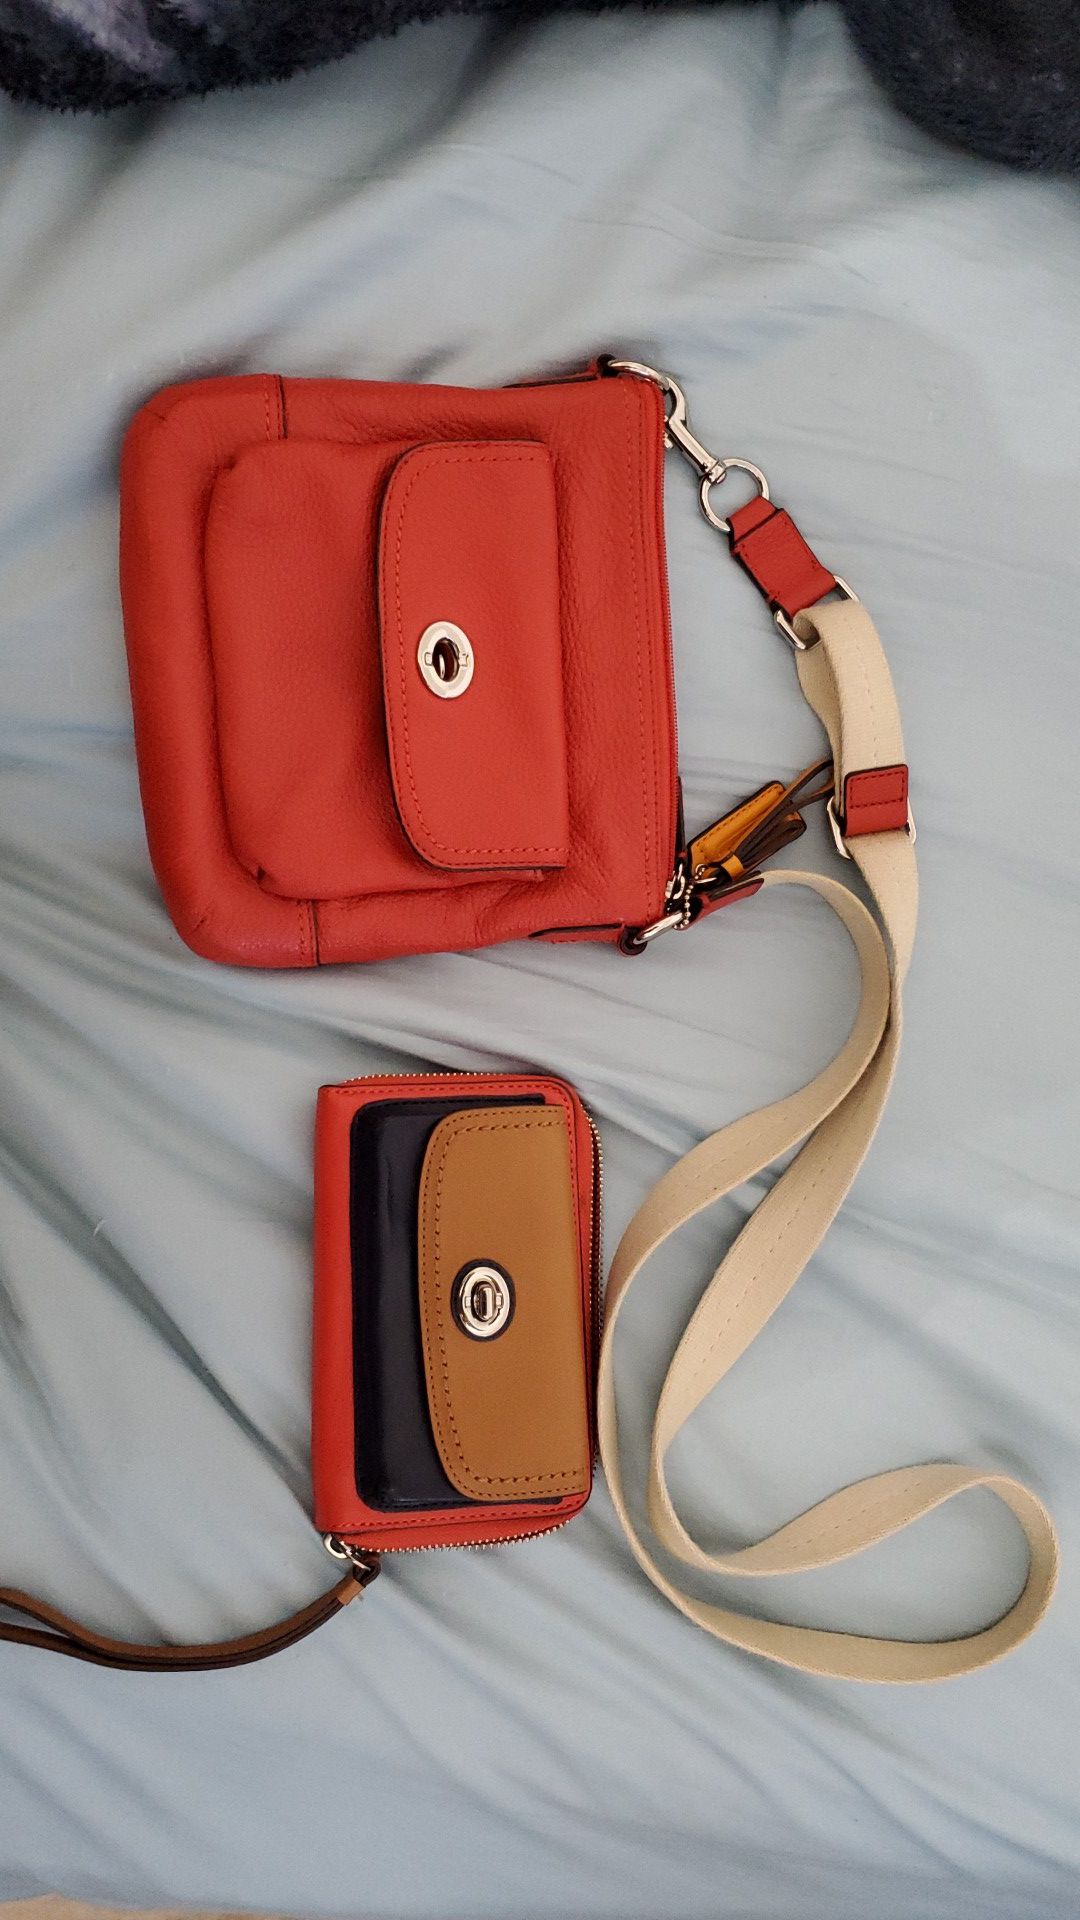 Coach handbag and purse